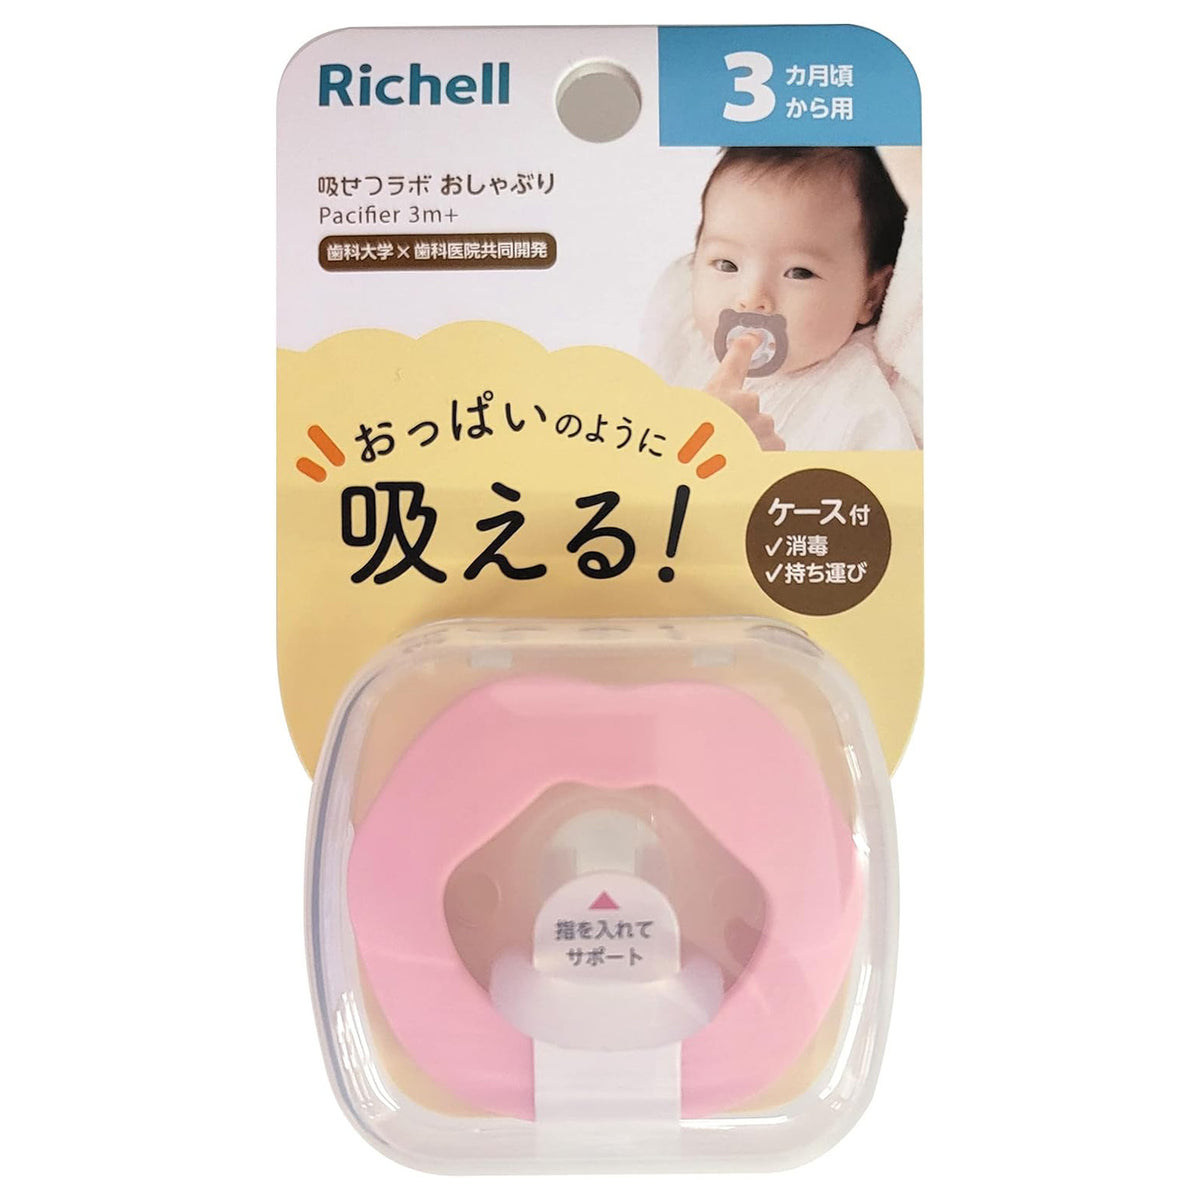 Richell寶寶安撫奶嘴 適用於3個月以上